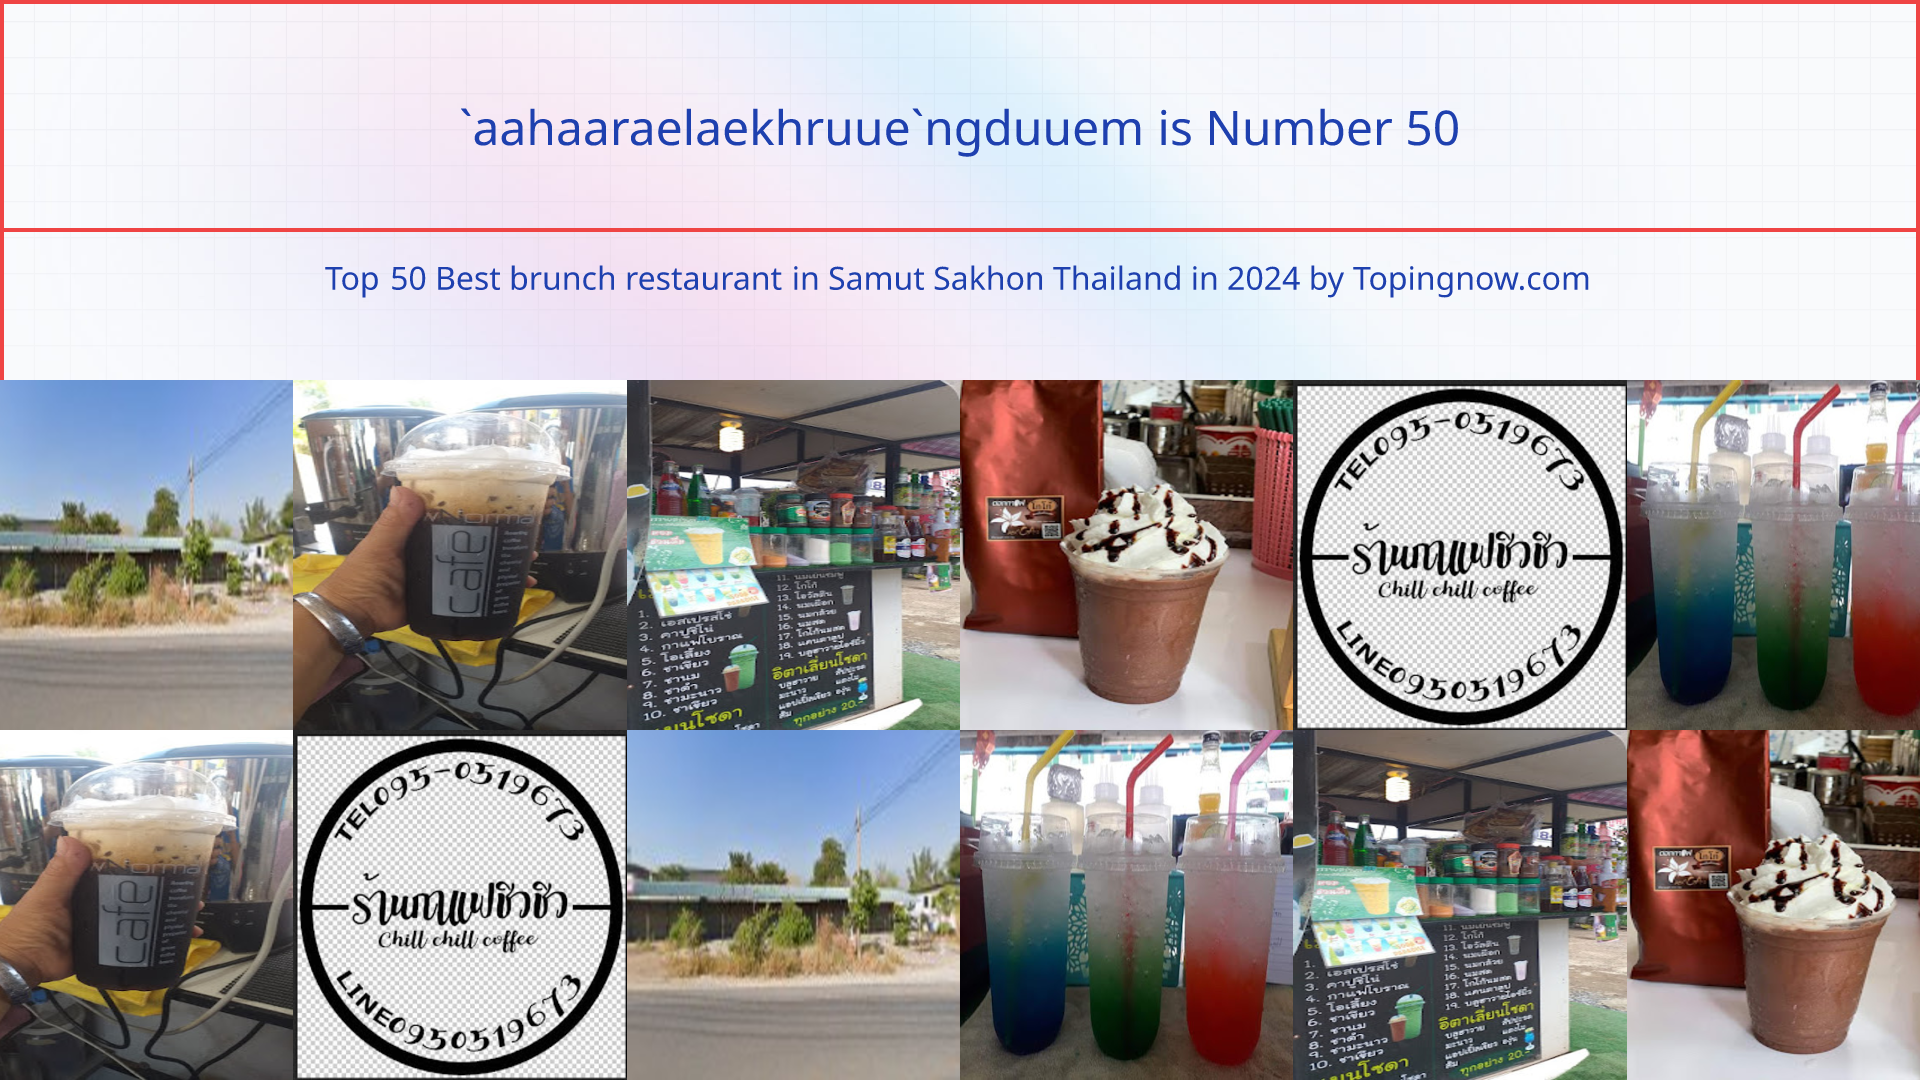 `aahaaraelaekhruue`ngduuem: Top 50 Best brunch restaurant in Samut Sakhon Thailand in 2024